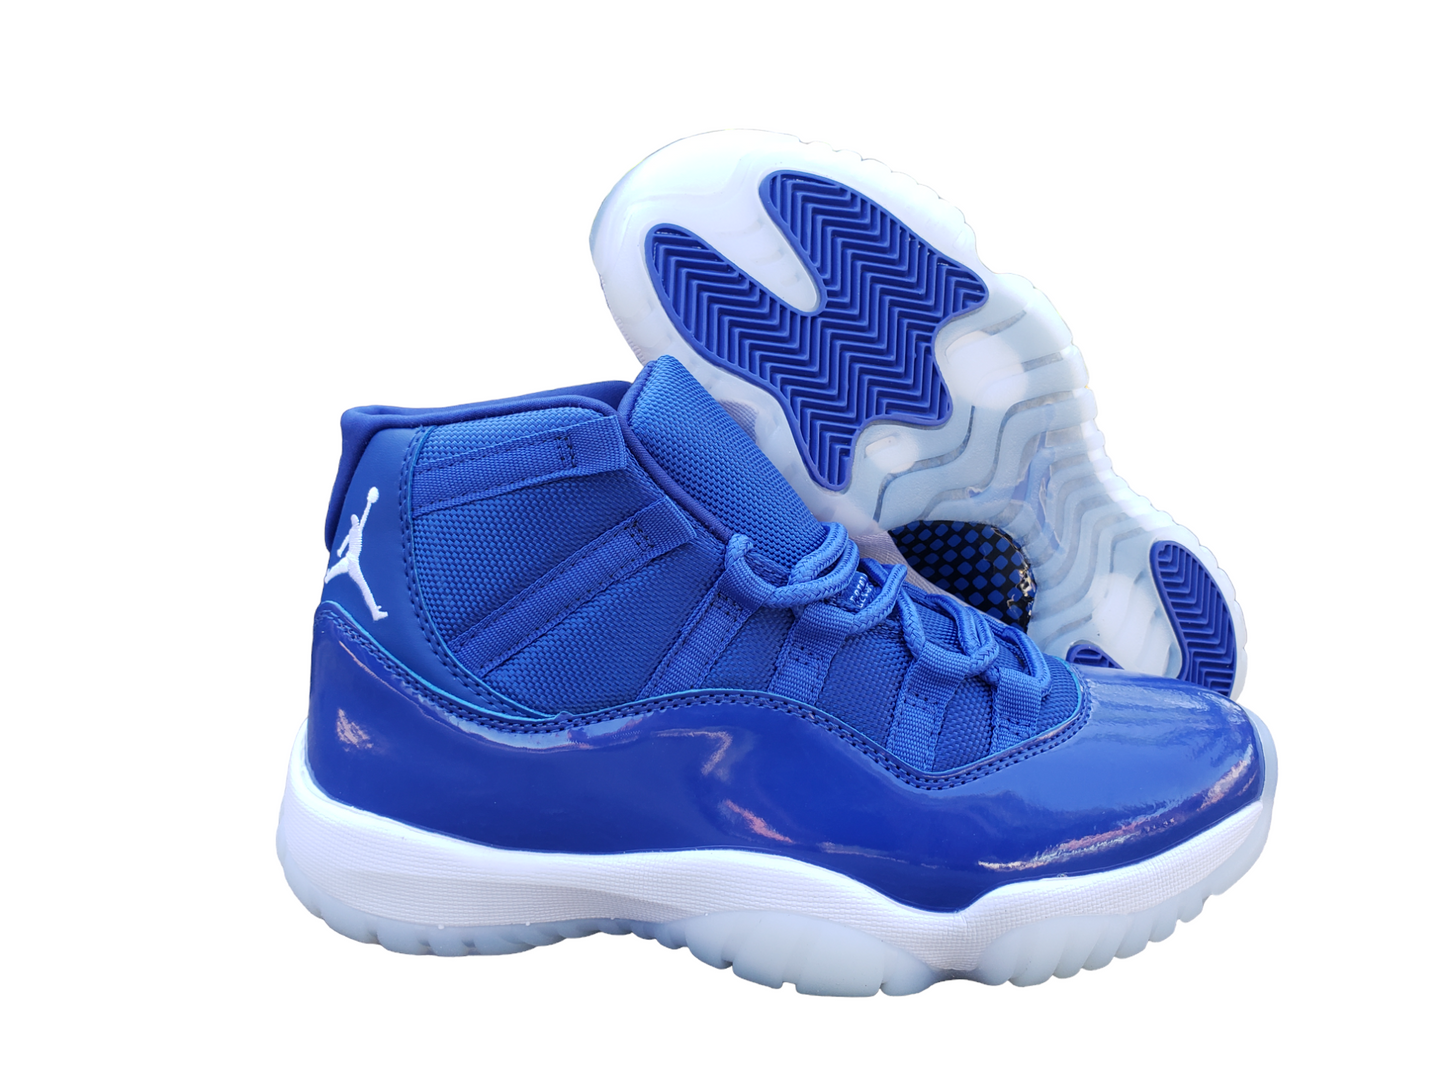 Jordan 11 tout bleu